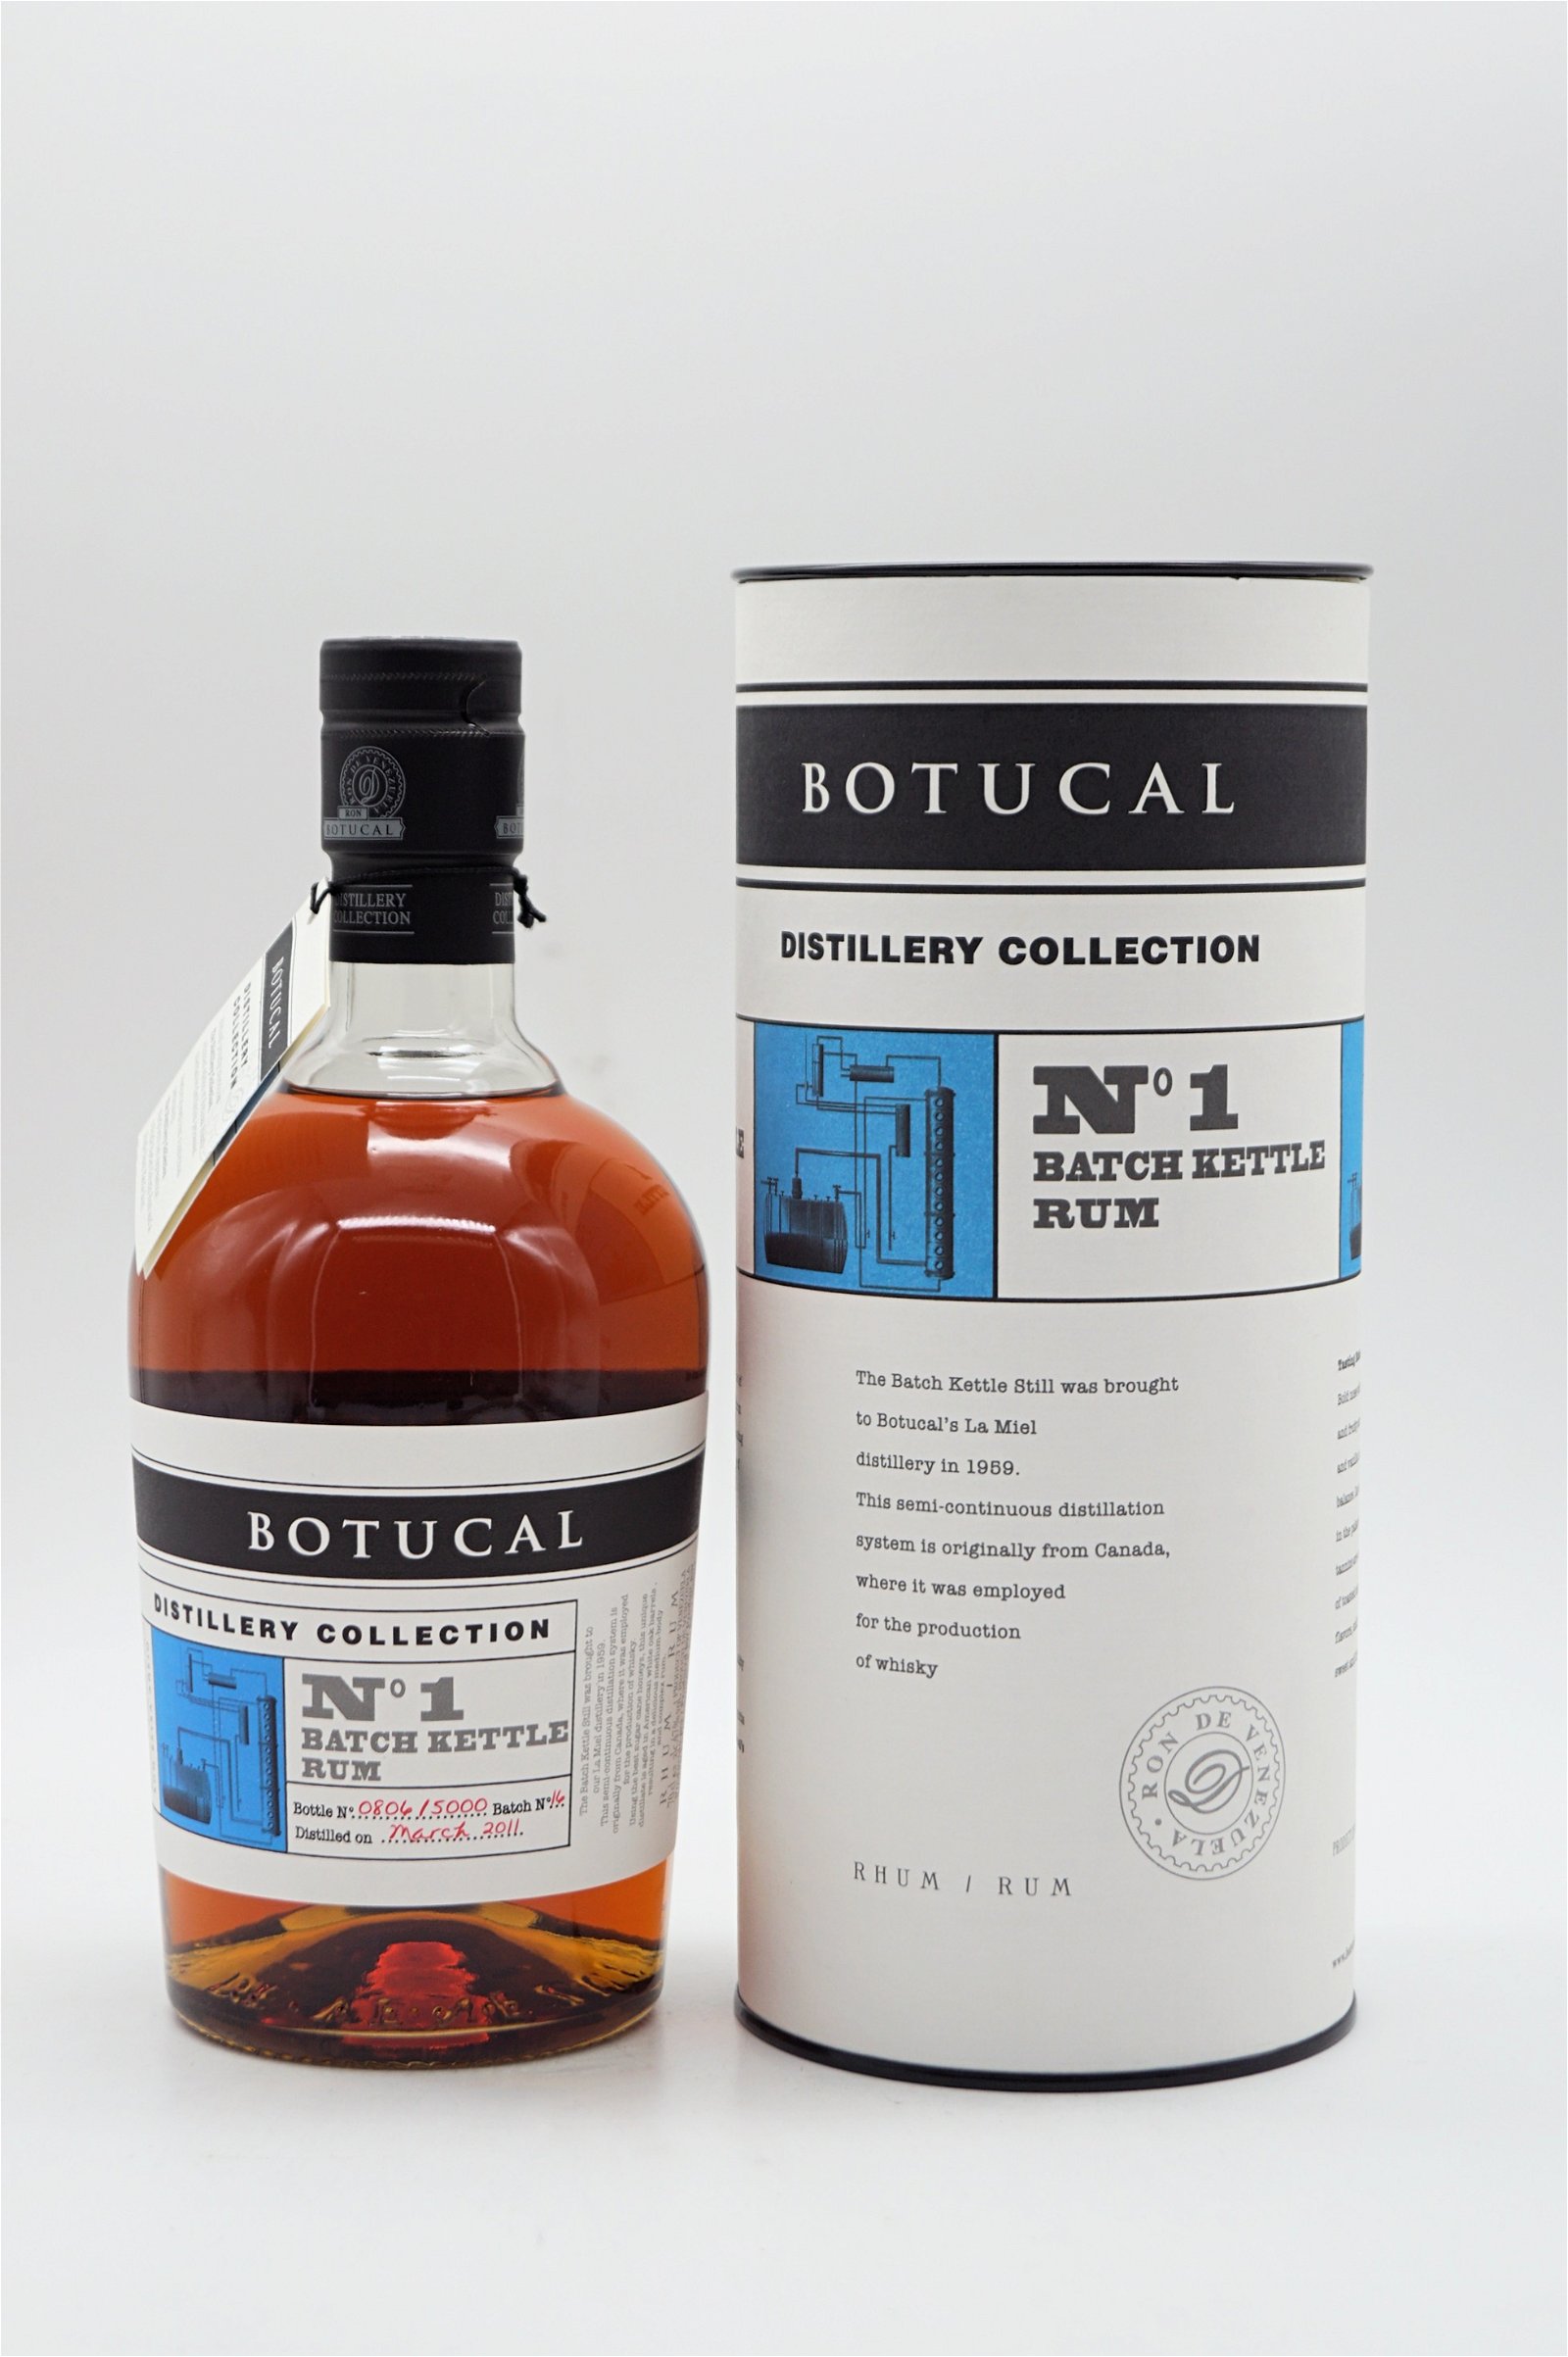 Botucal Distillery Collection No 1 Batch Kettle Rum